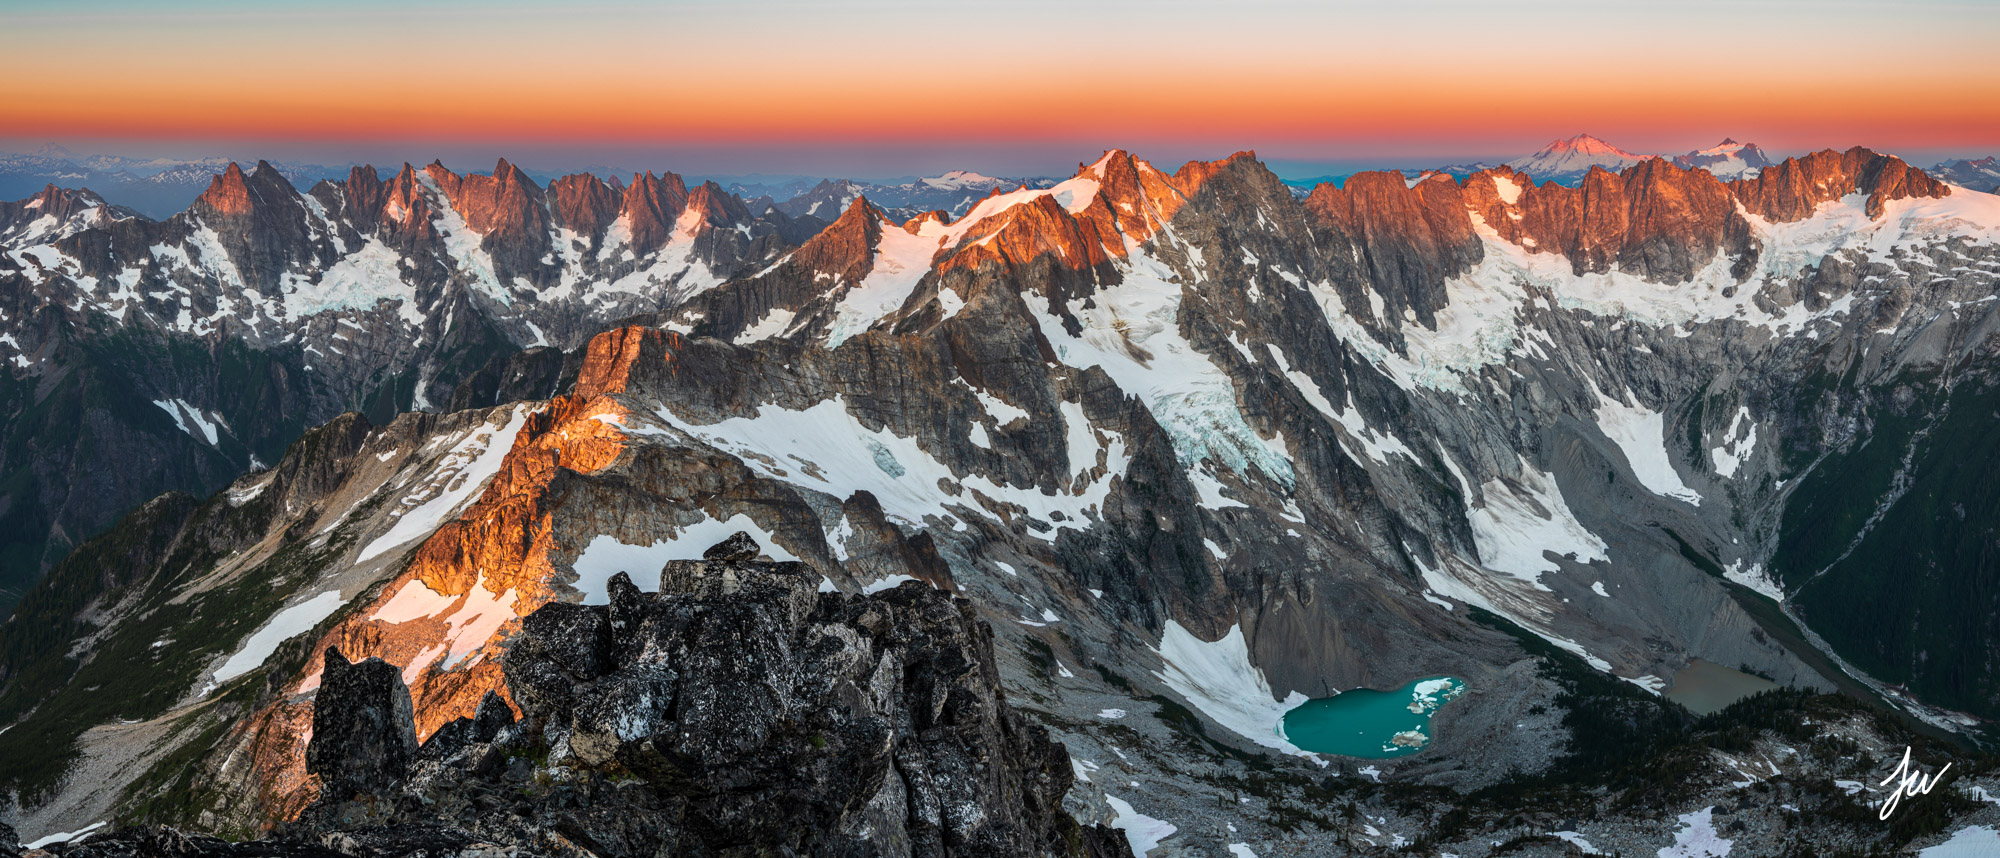 Sunrise panorama in North Cascades National Park in Washington.